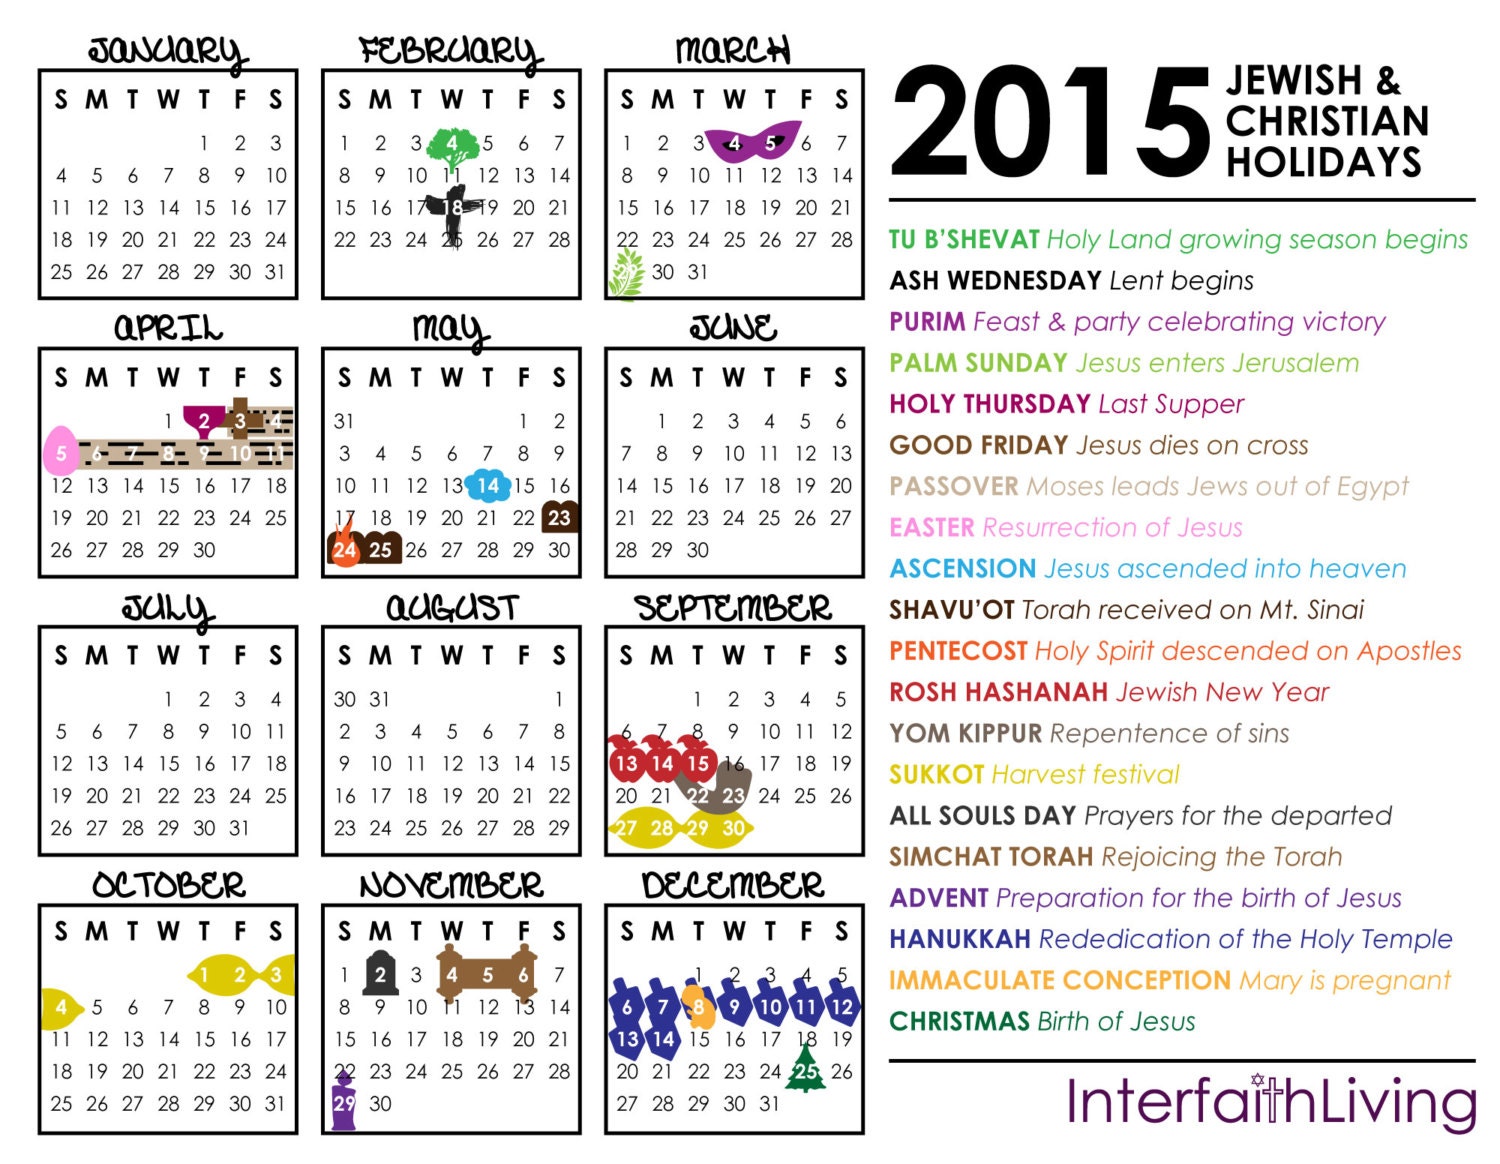 2015 Jewish & Christian Holidays Calendar by InterfaithLiving